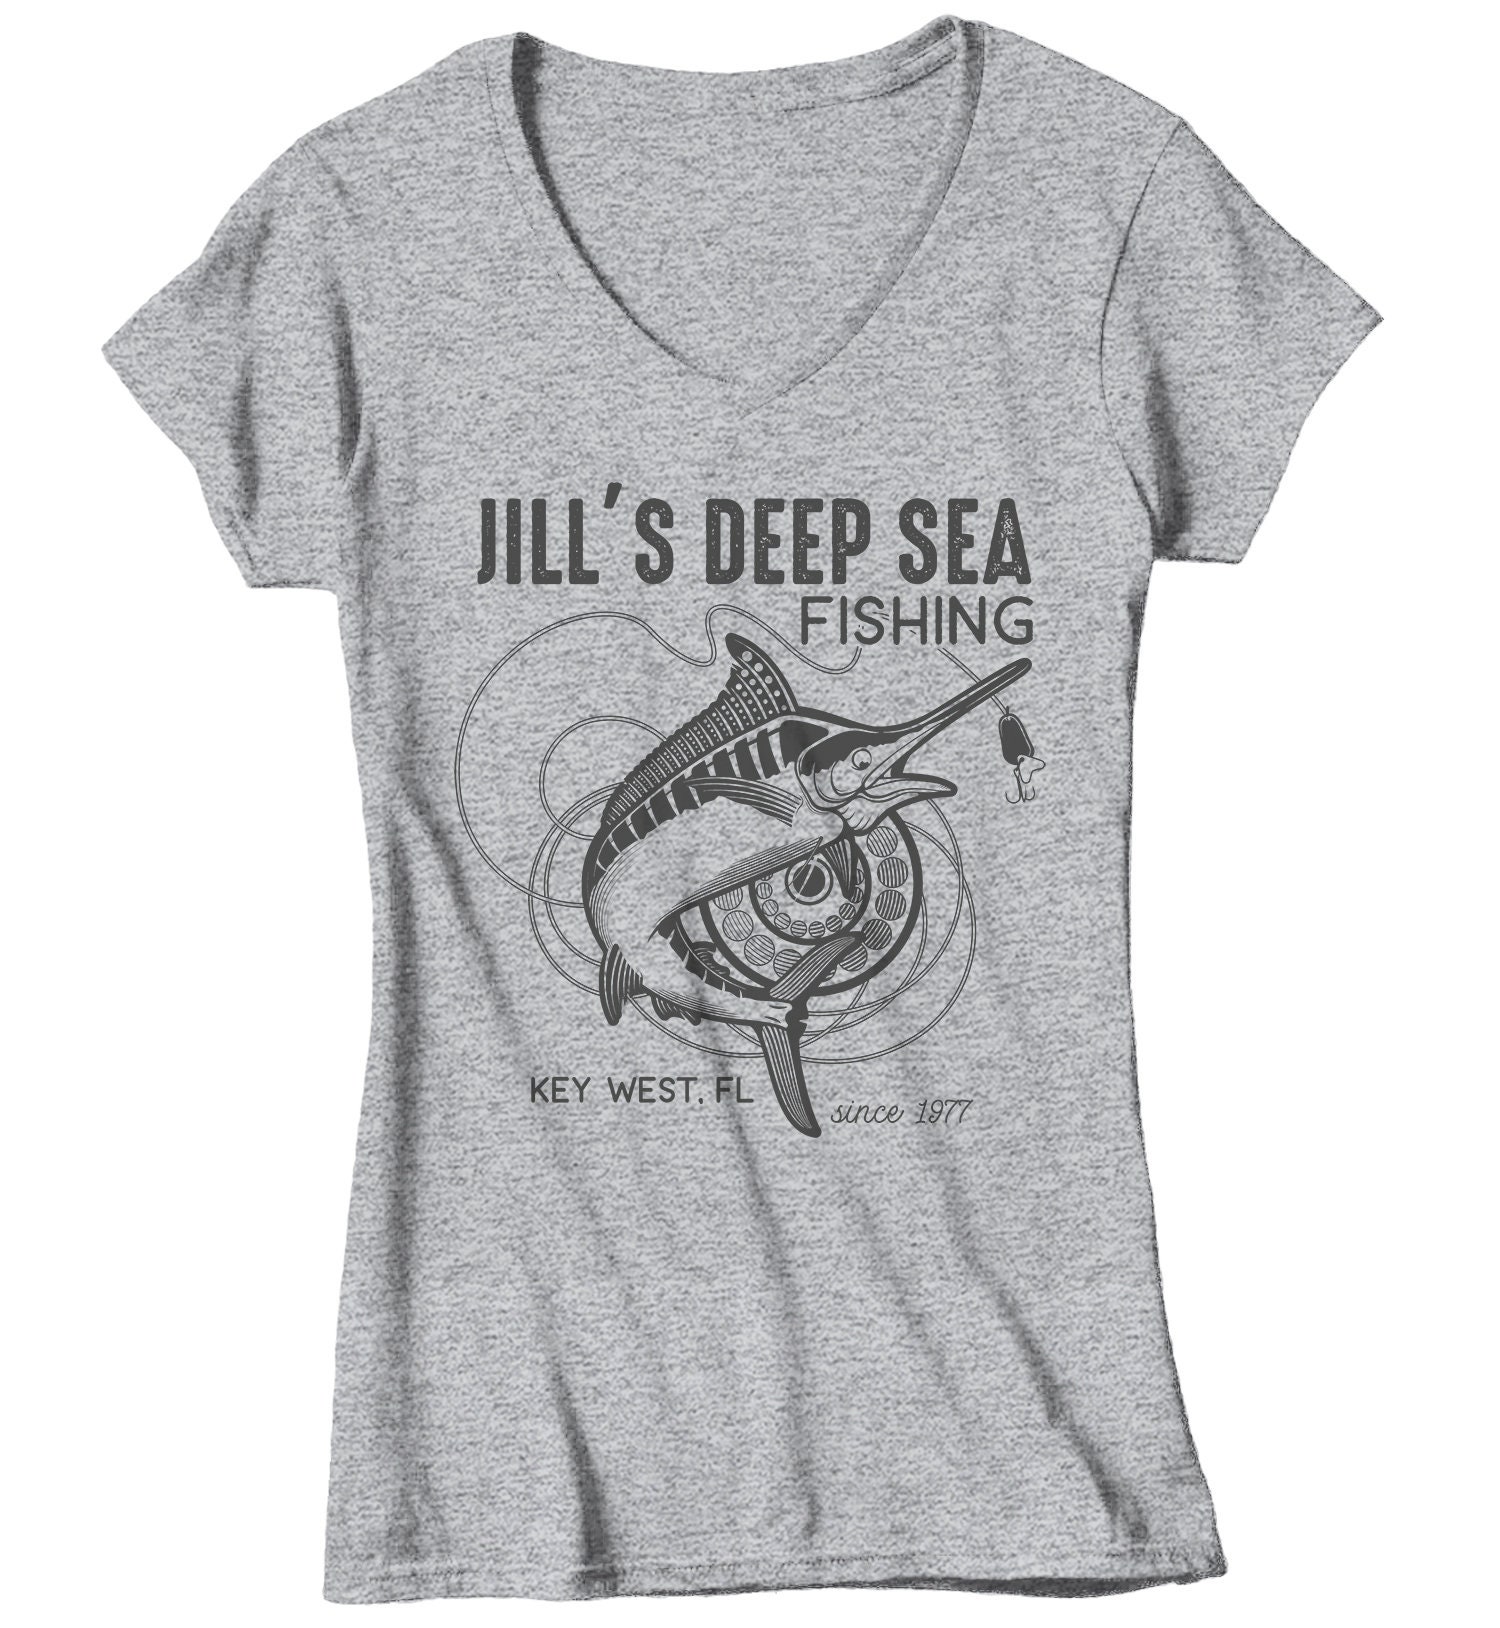 Druse Vinyl - Personalized women's fishing shirts/beach coverups